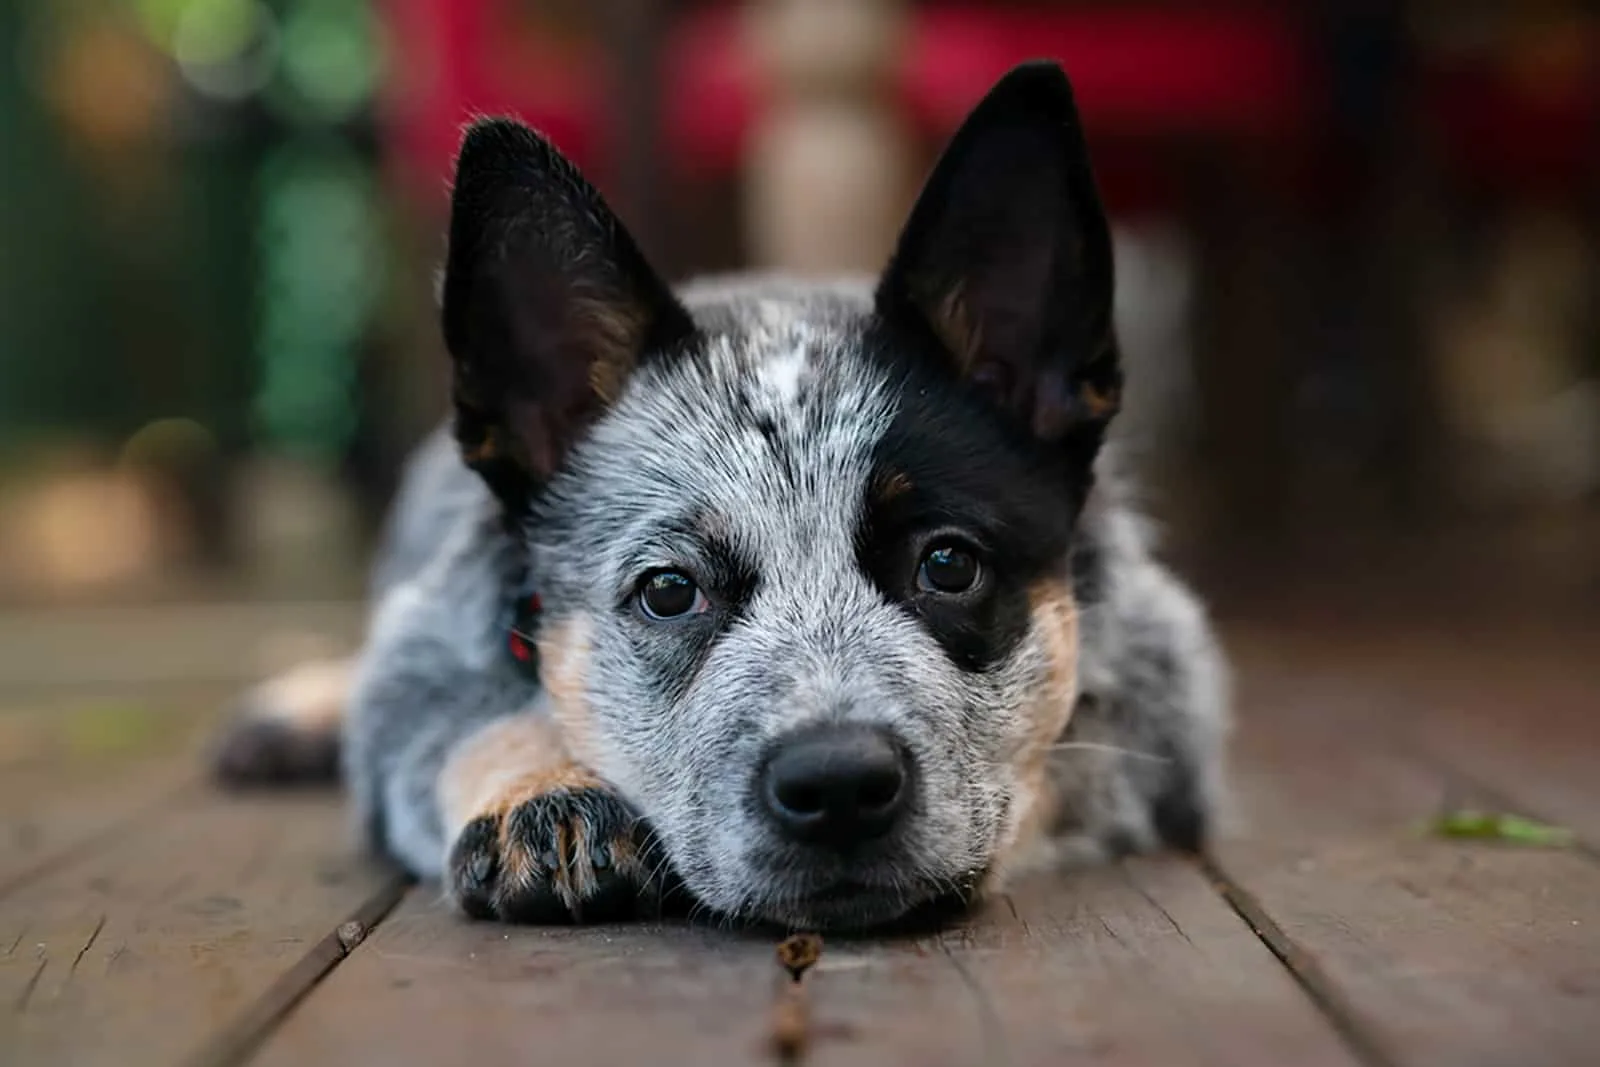 australian cattle dog puppy resting on the wooden floor